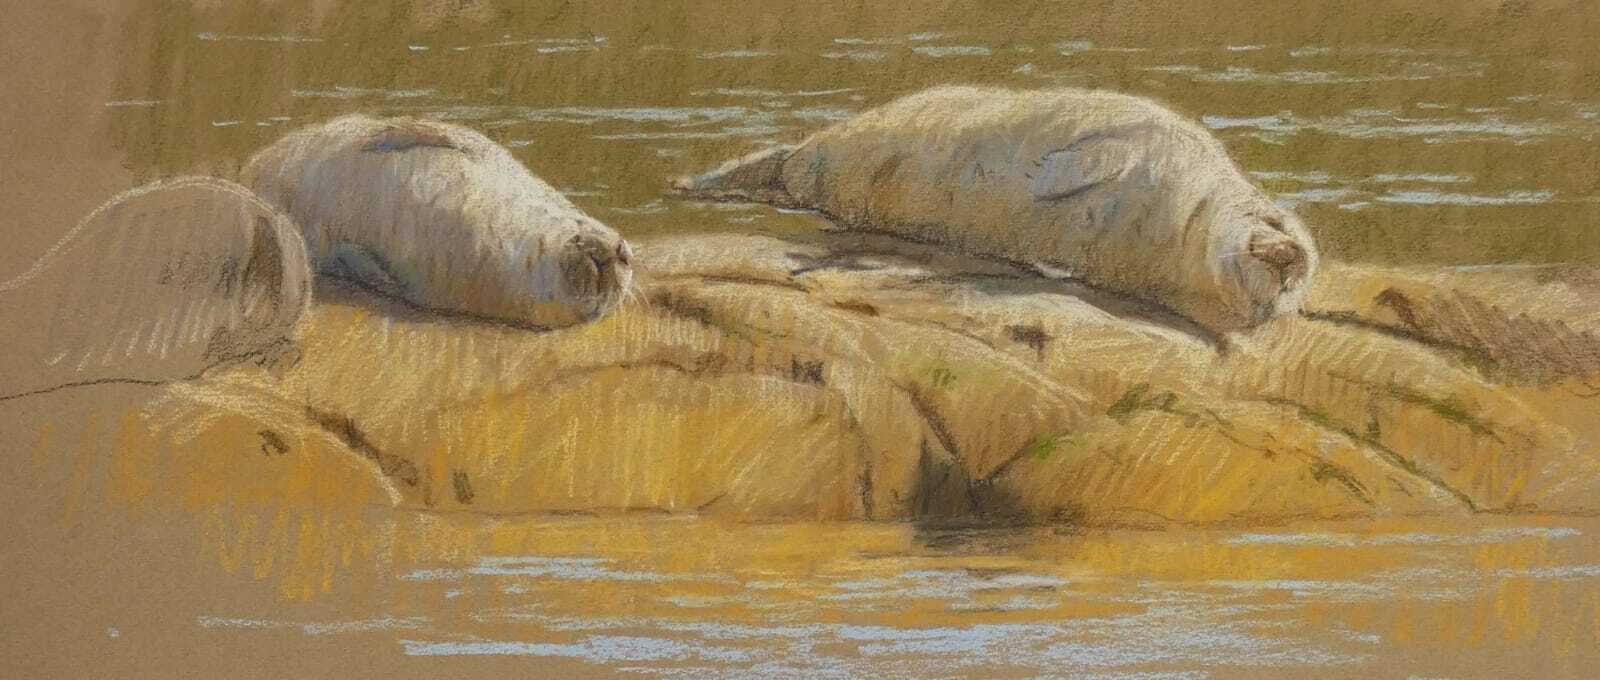   Common Seals by John Threlfall